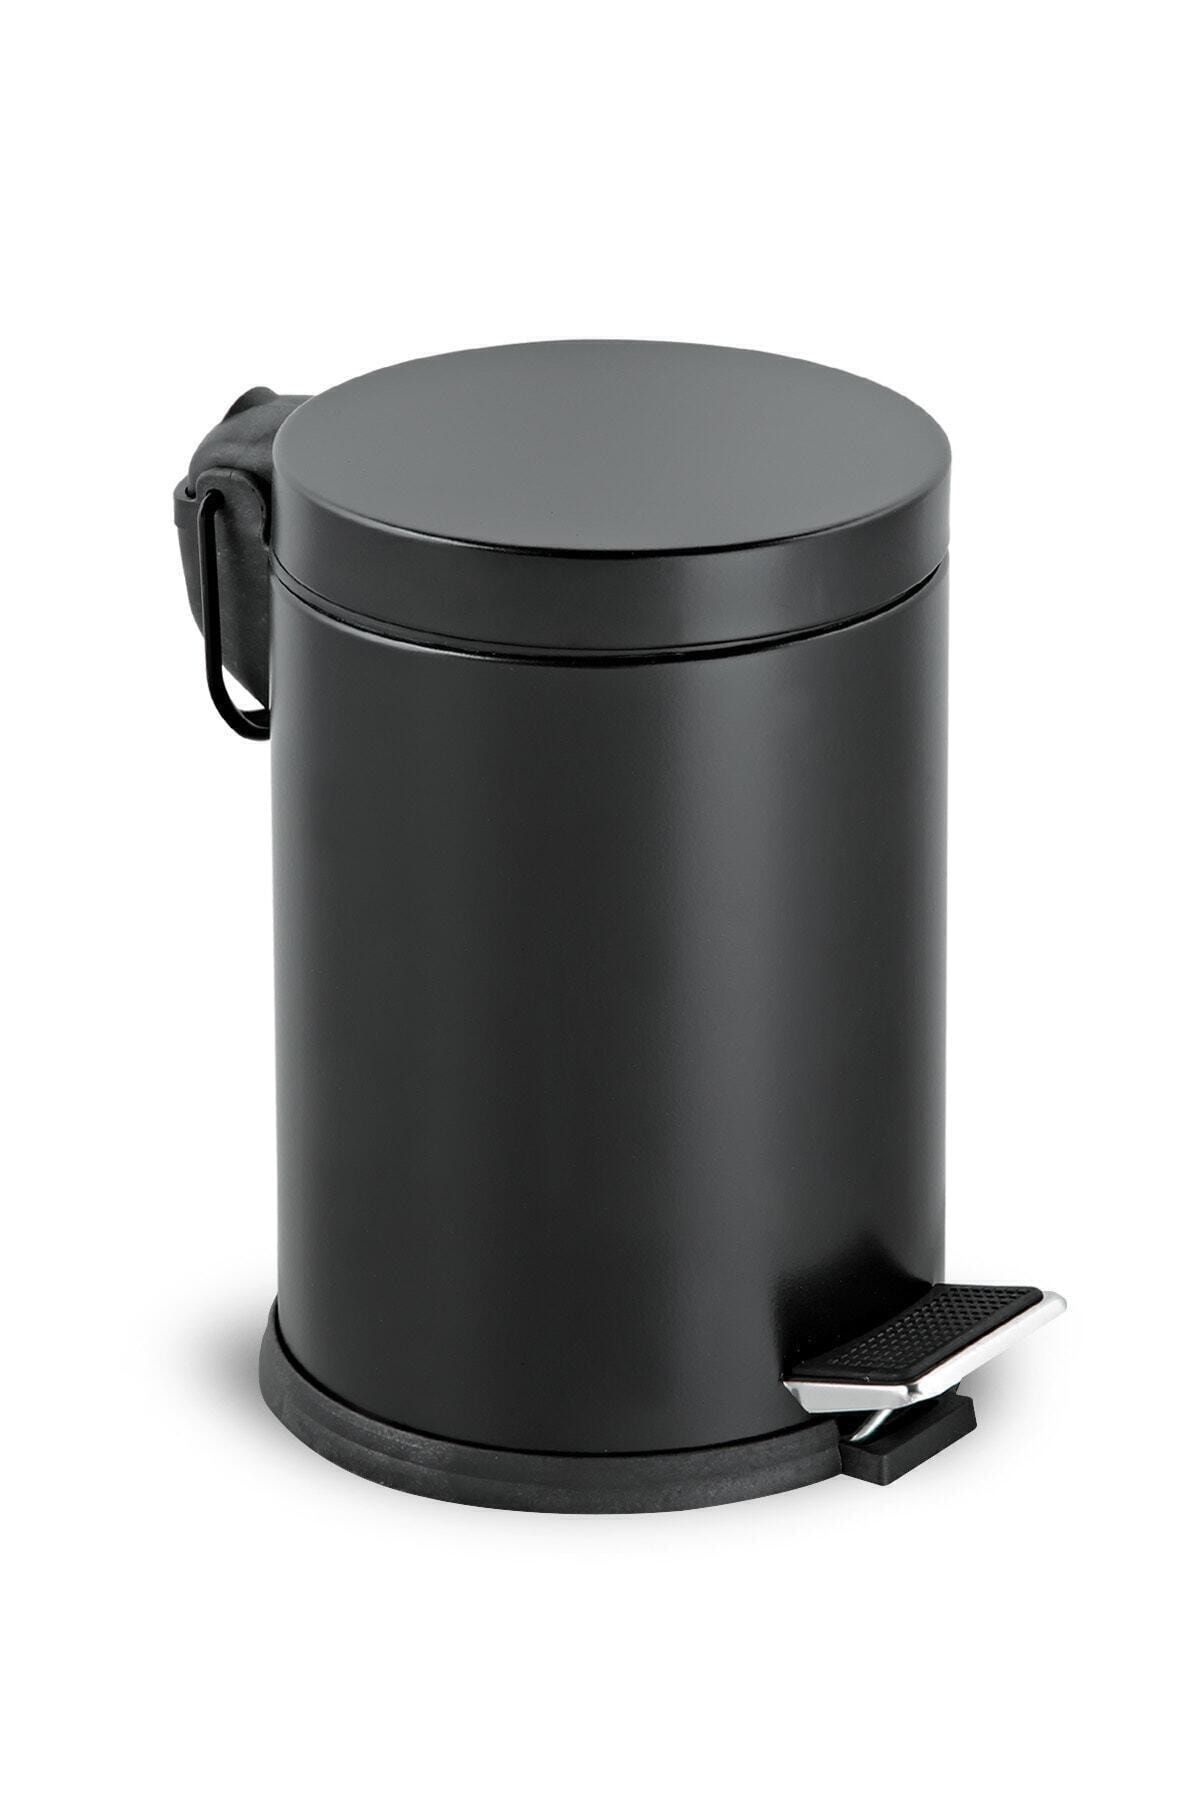 GörSeç Siyah Renkli Pedallı Metal 3 Litre Çöp Kovası Banyo Tuvalet Balkon Mutfak,